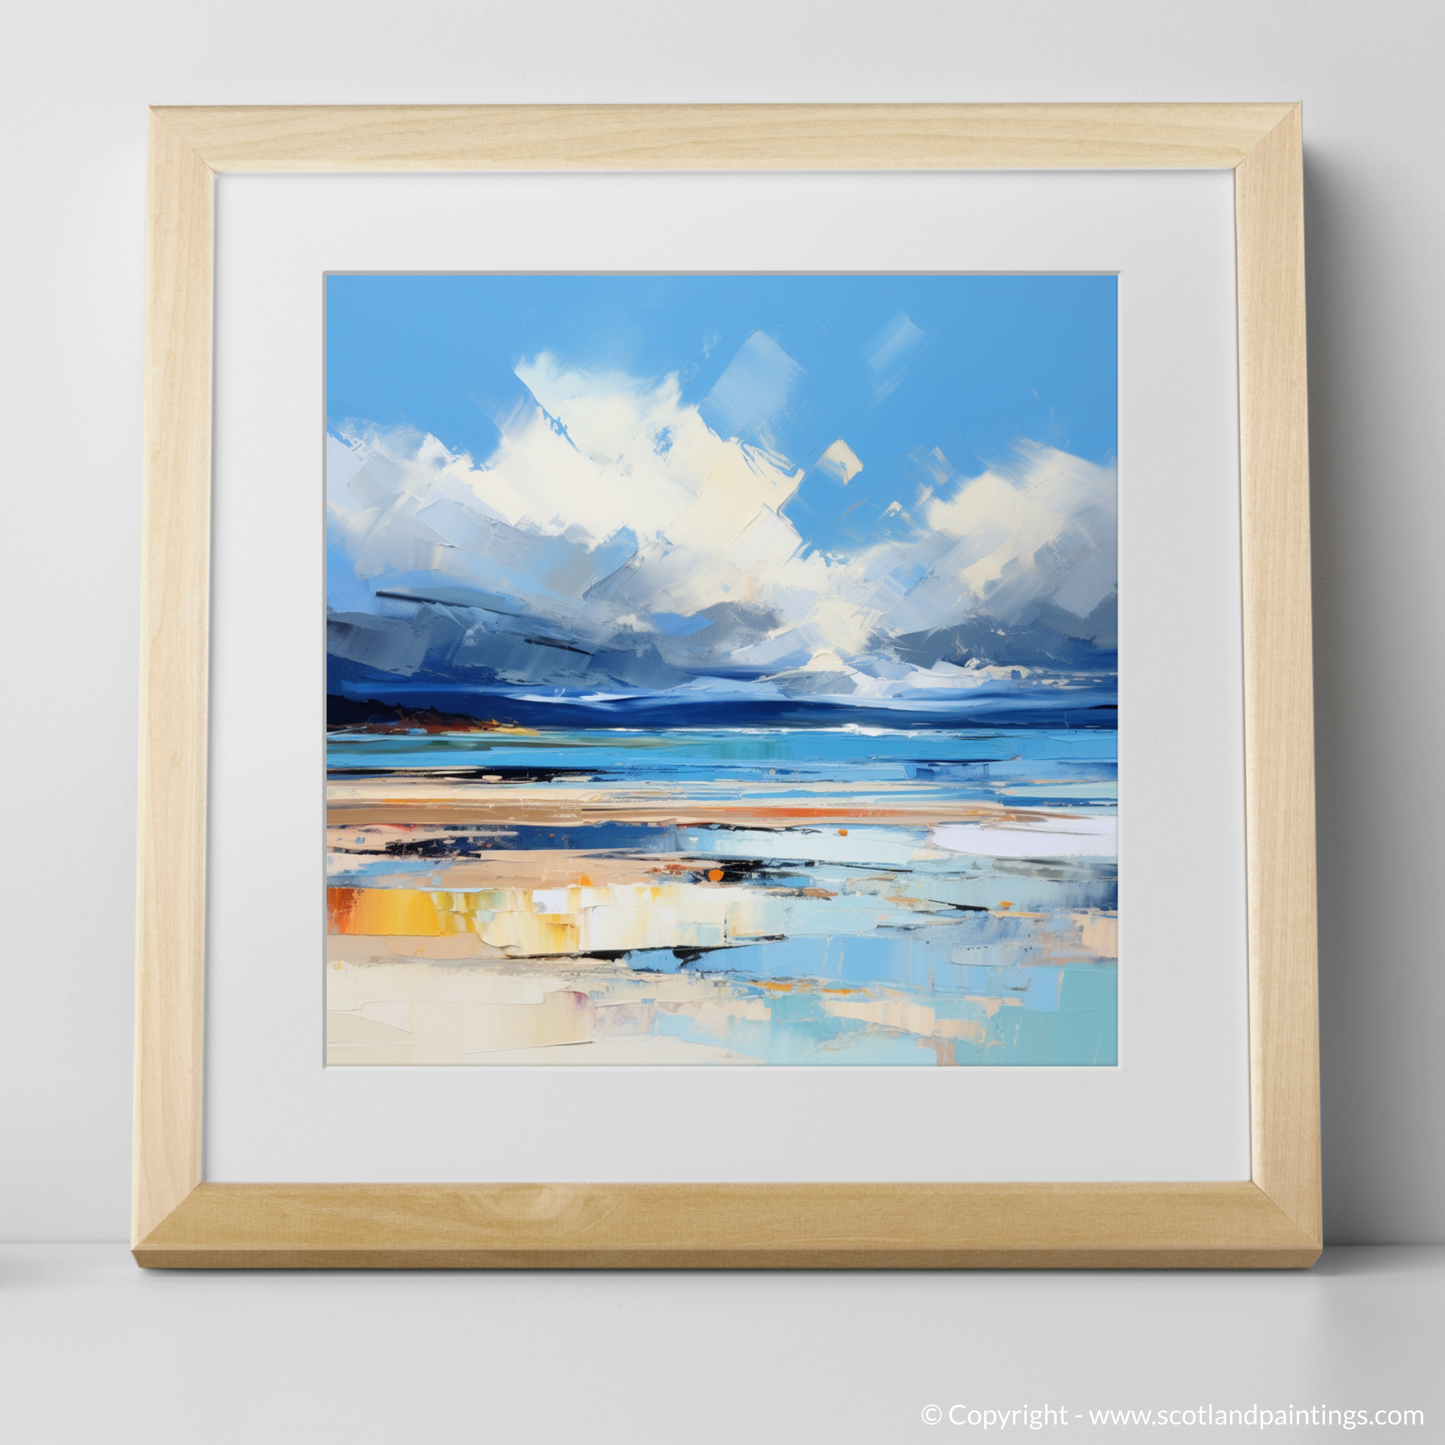 Art Print of Nairn Beach, Nairn with a natural frame